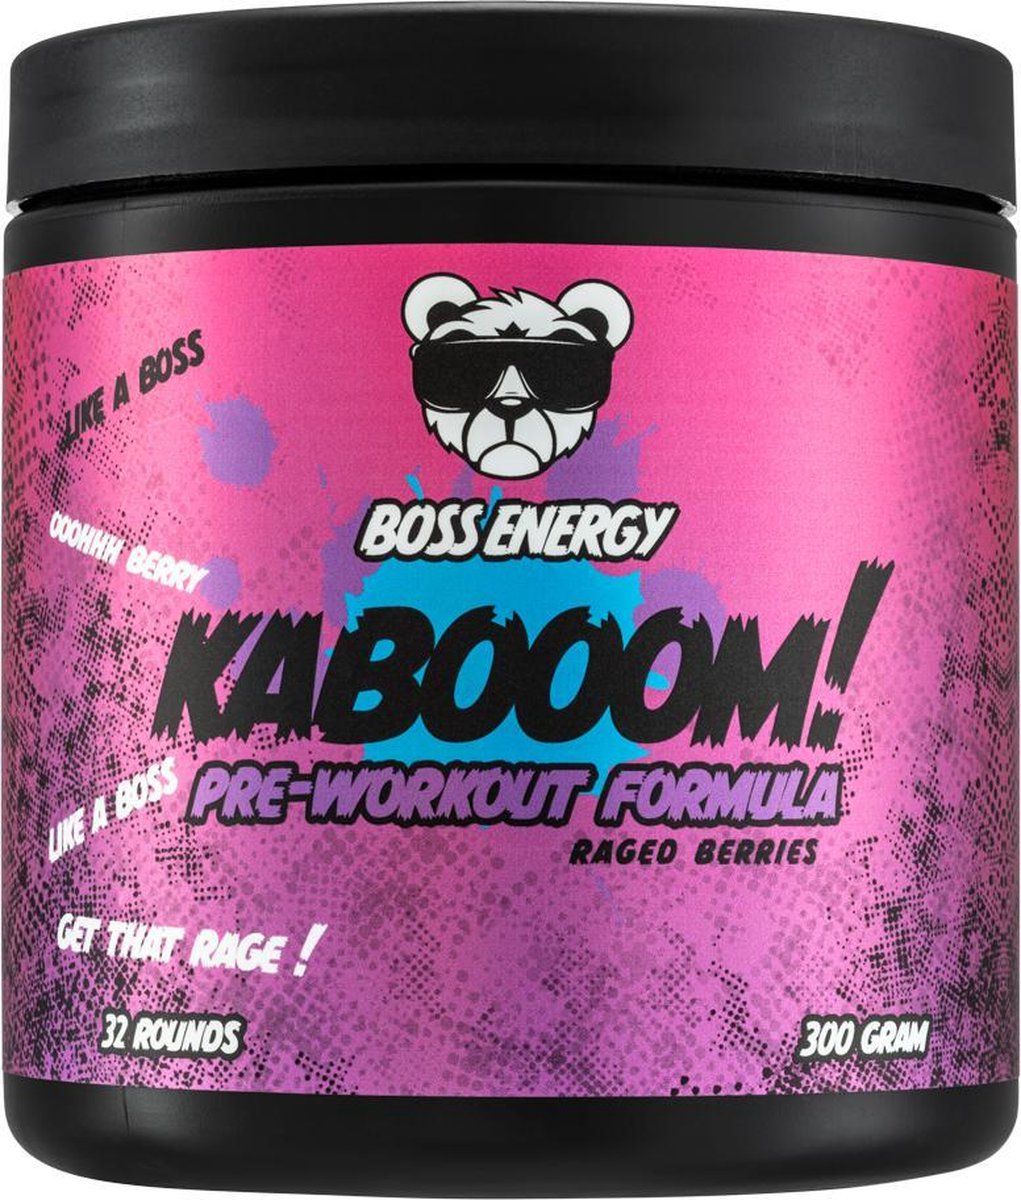 Boss Energy - preworkout - Kabooom! Preworkout - Raged Berries